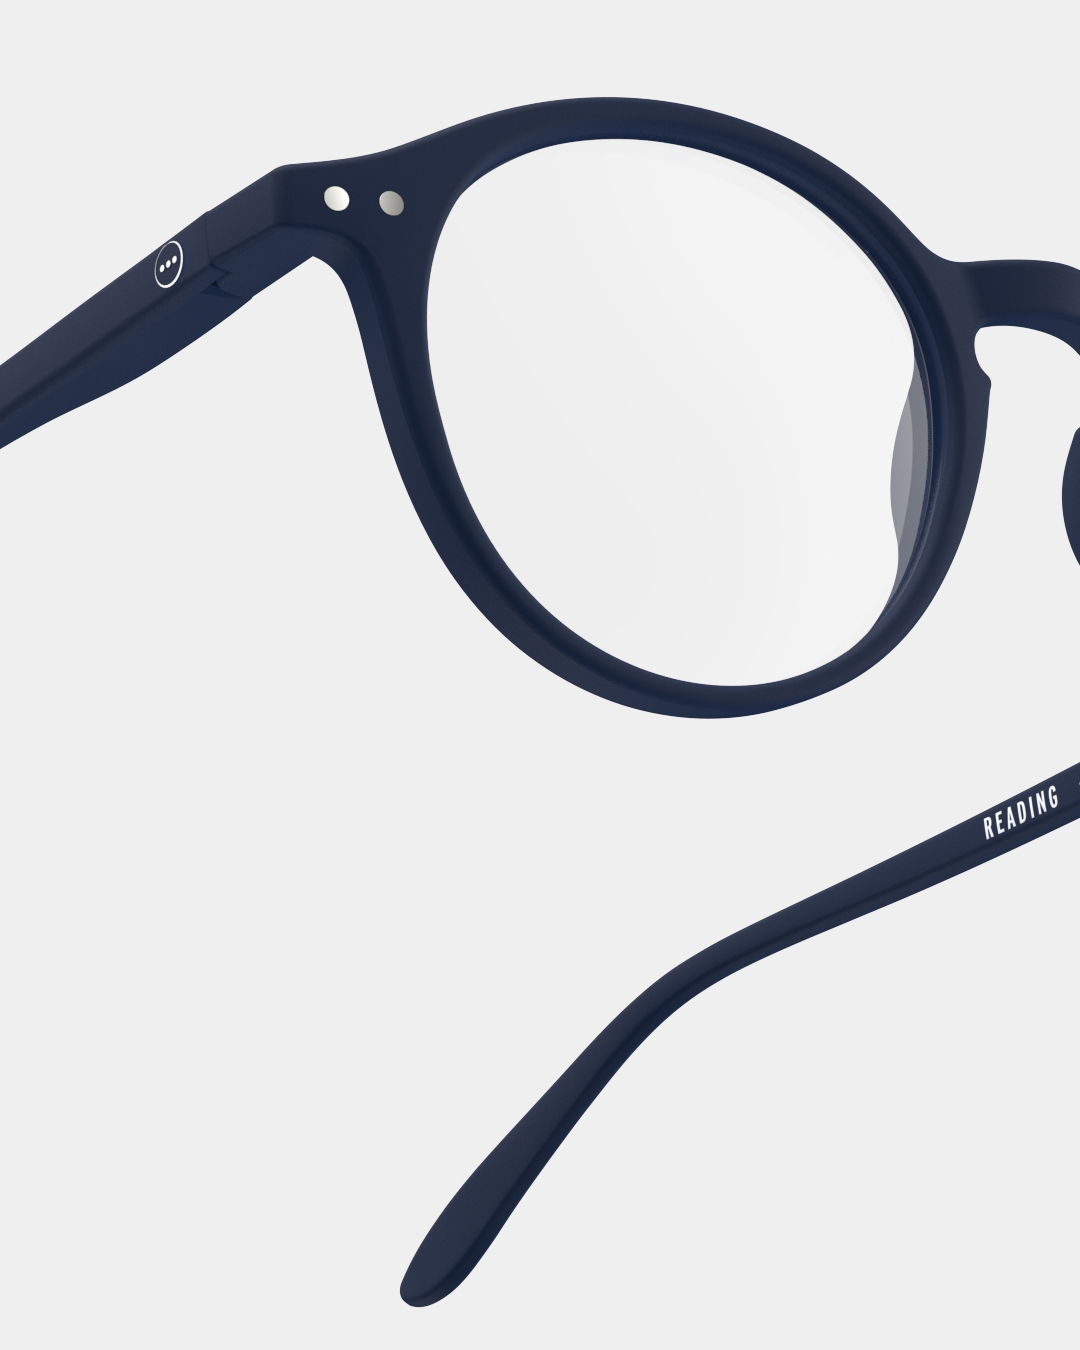 Trendy READING glasses #D Navy Blue Pantos - Izipizi